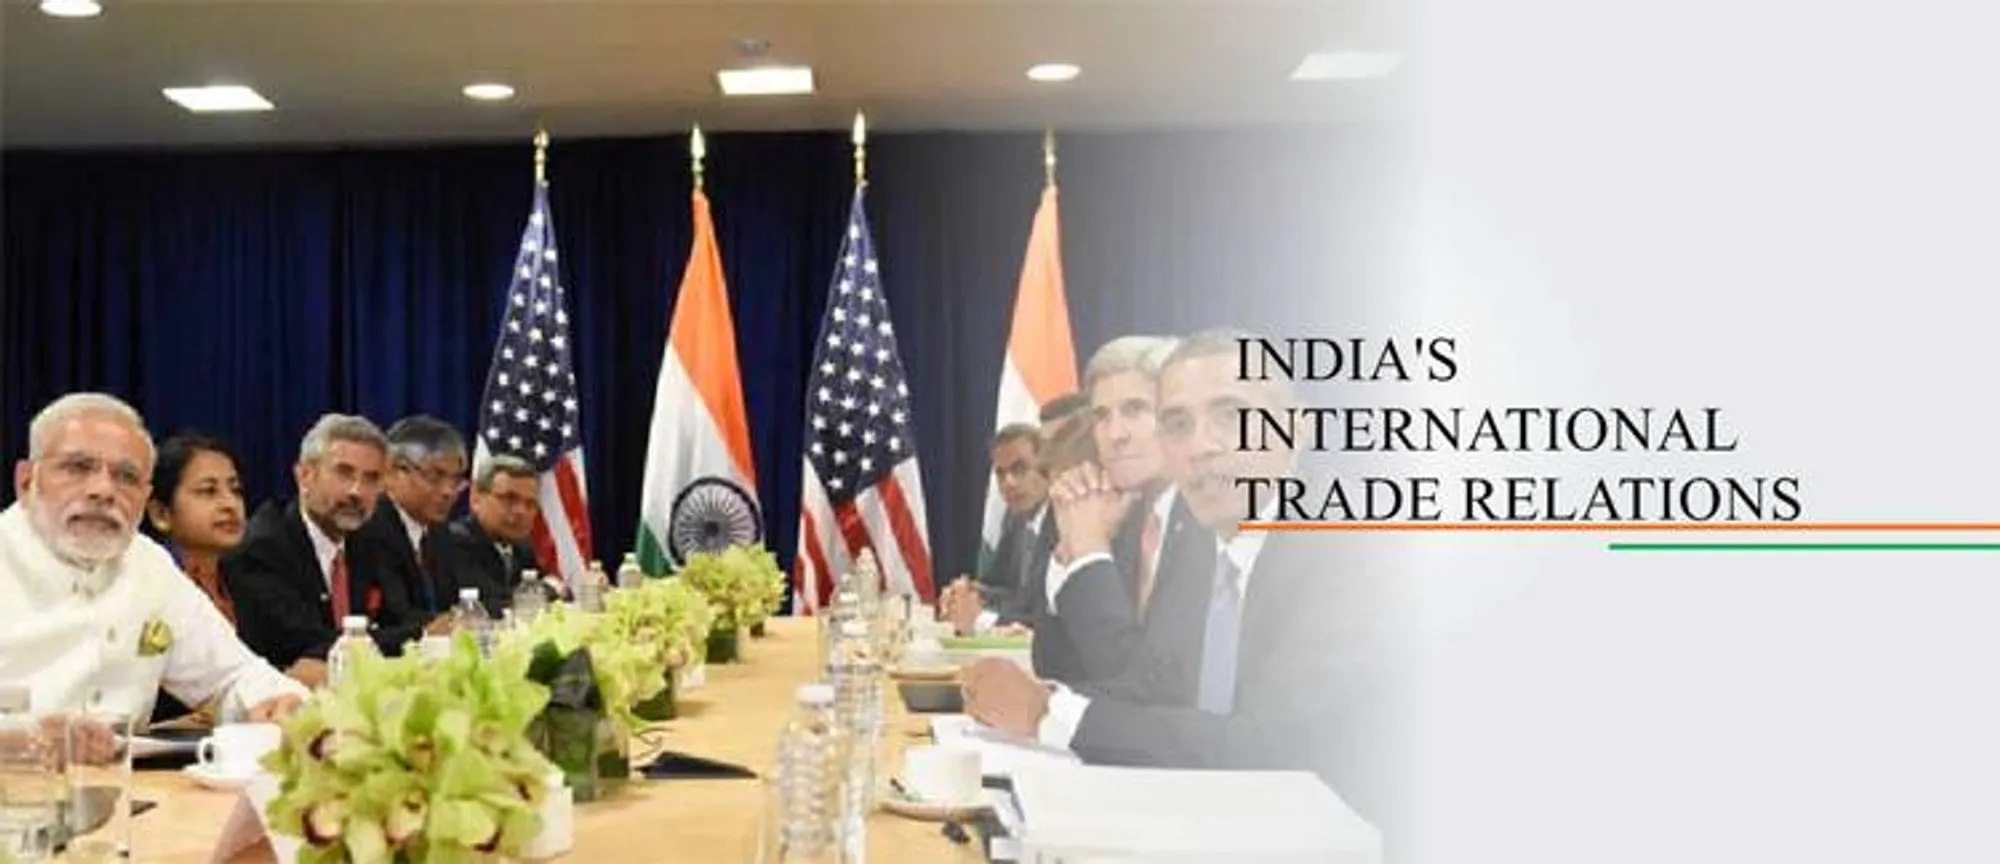 India's International Trade Relations